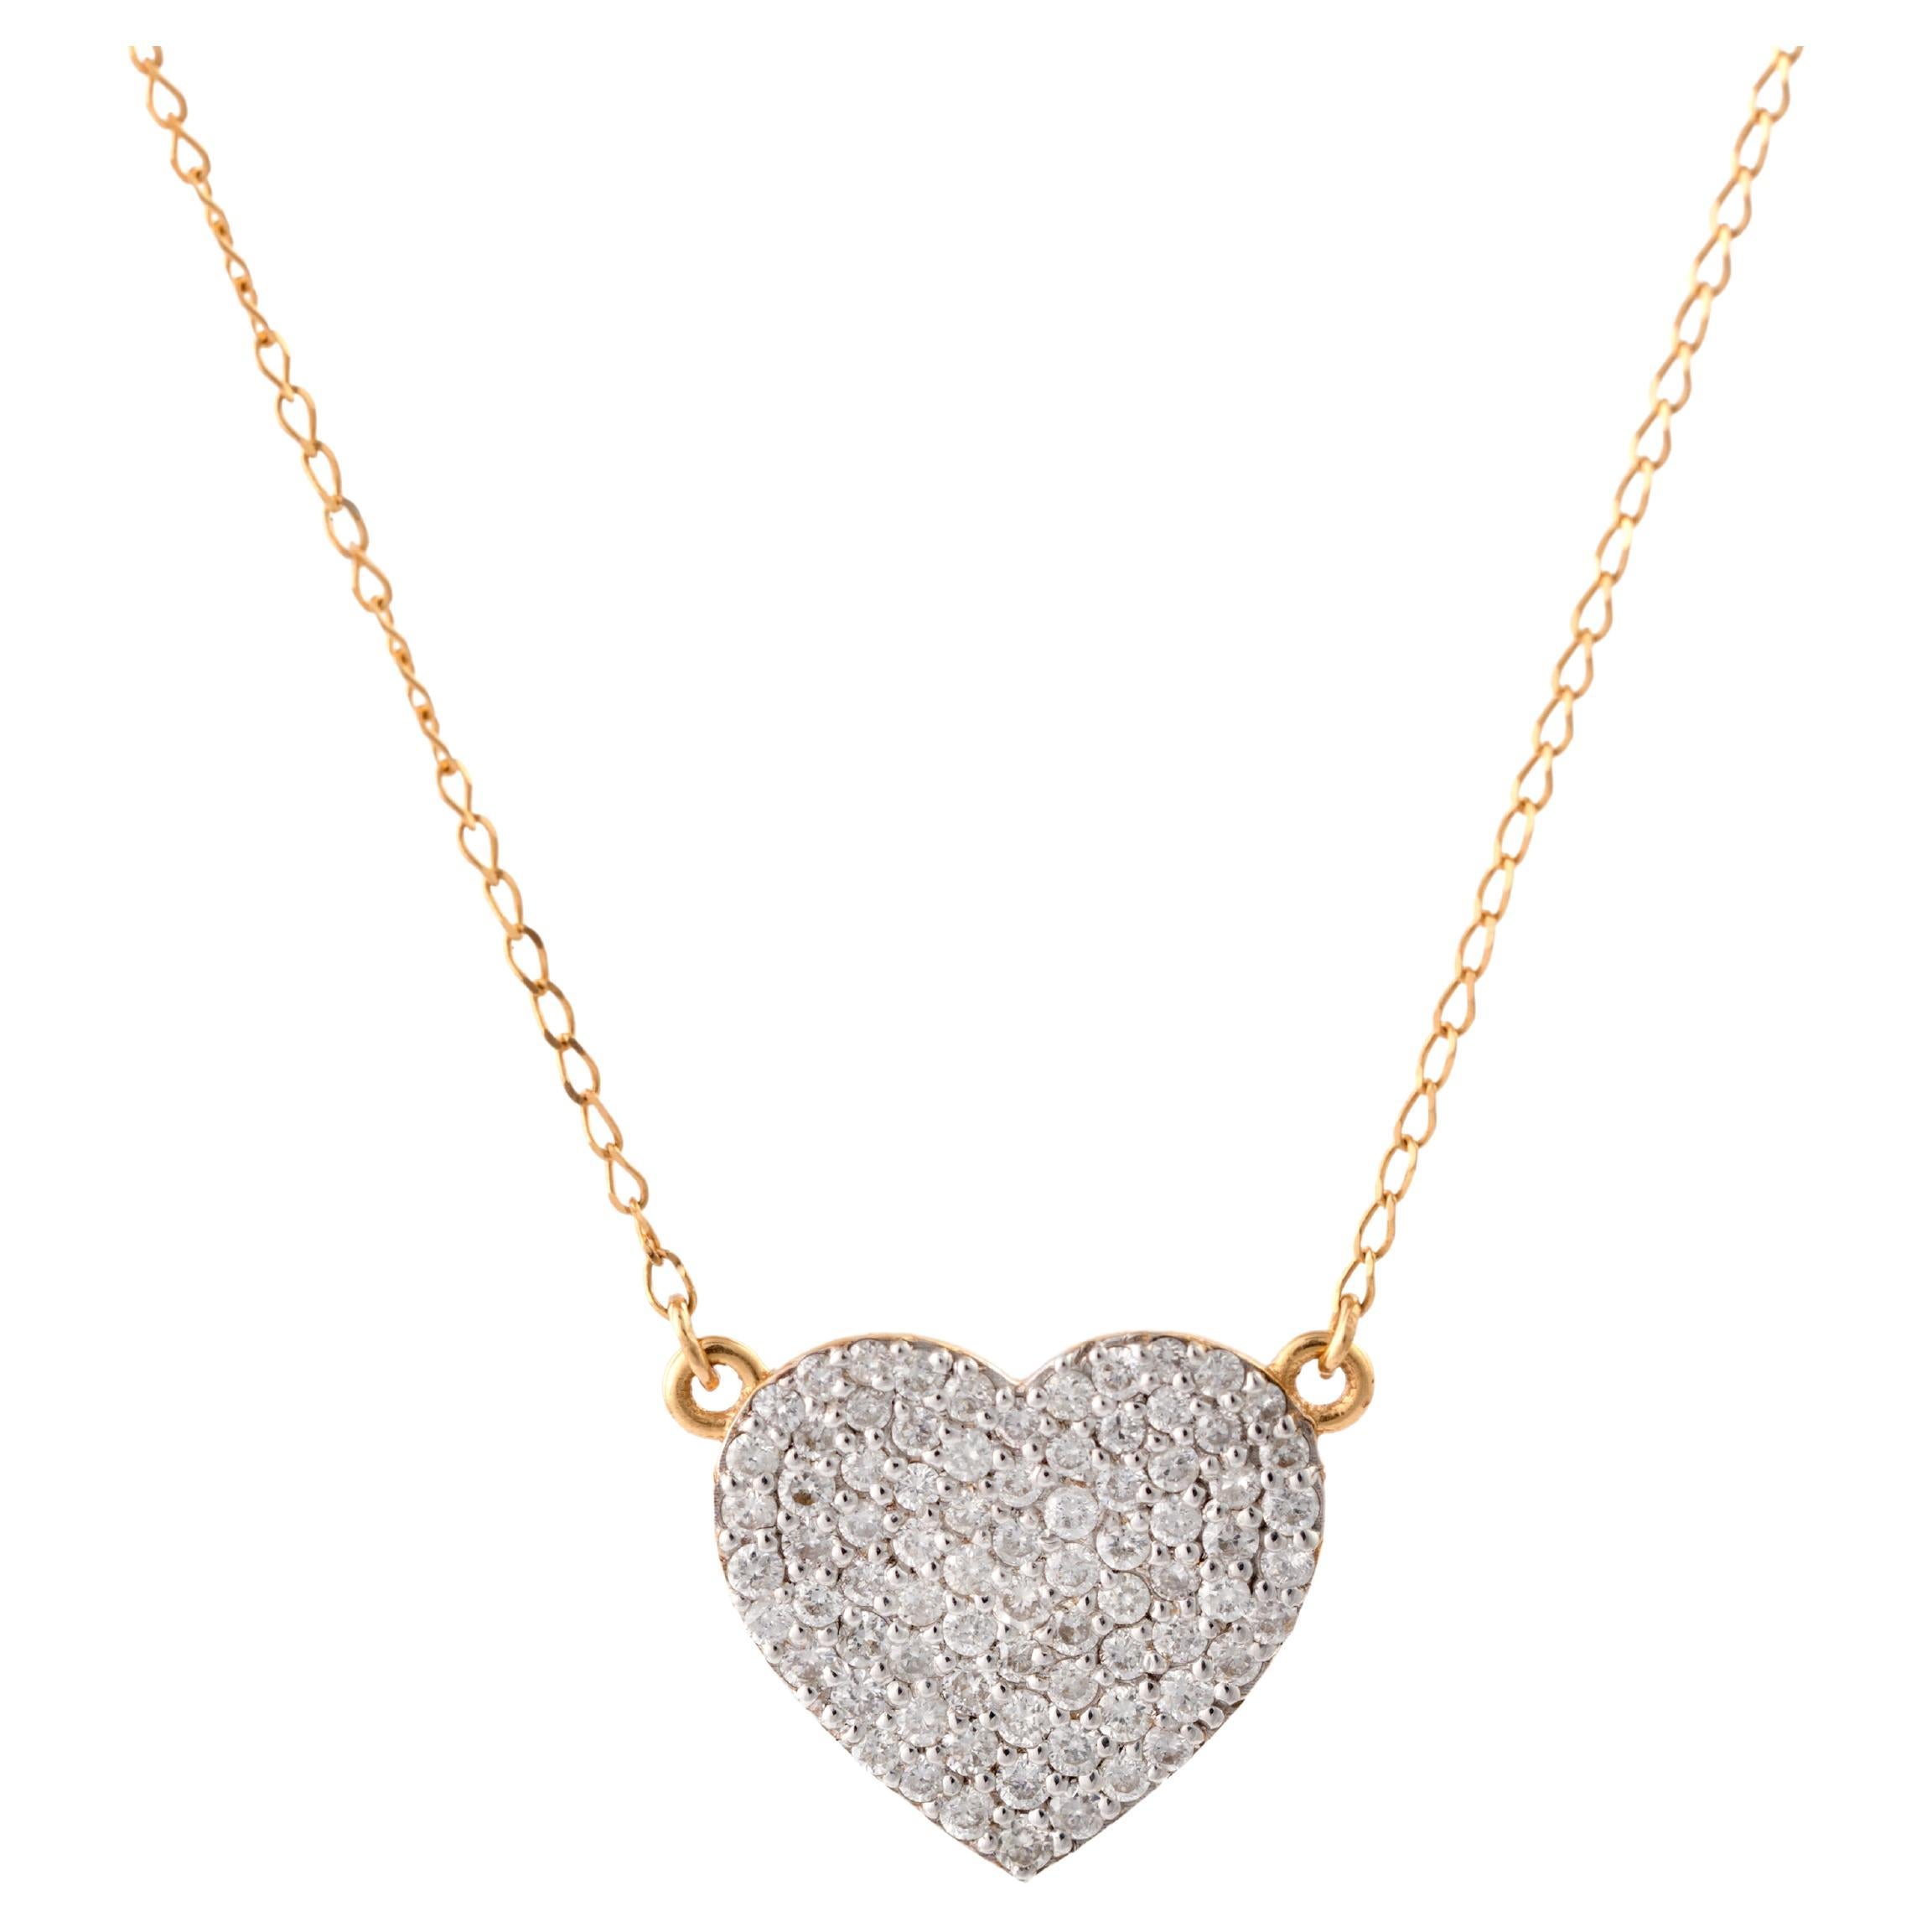 Pendentif en forme de cœur en or 18 carats avec diamants naturels de 0,56 carat